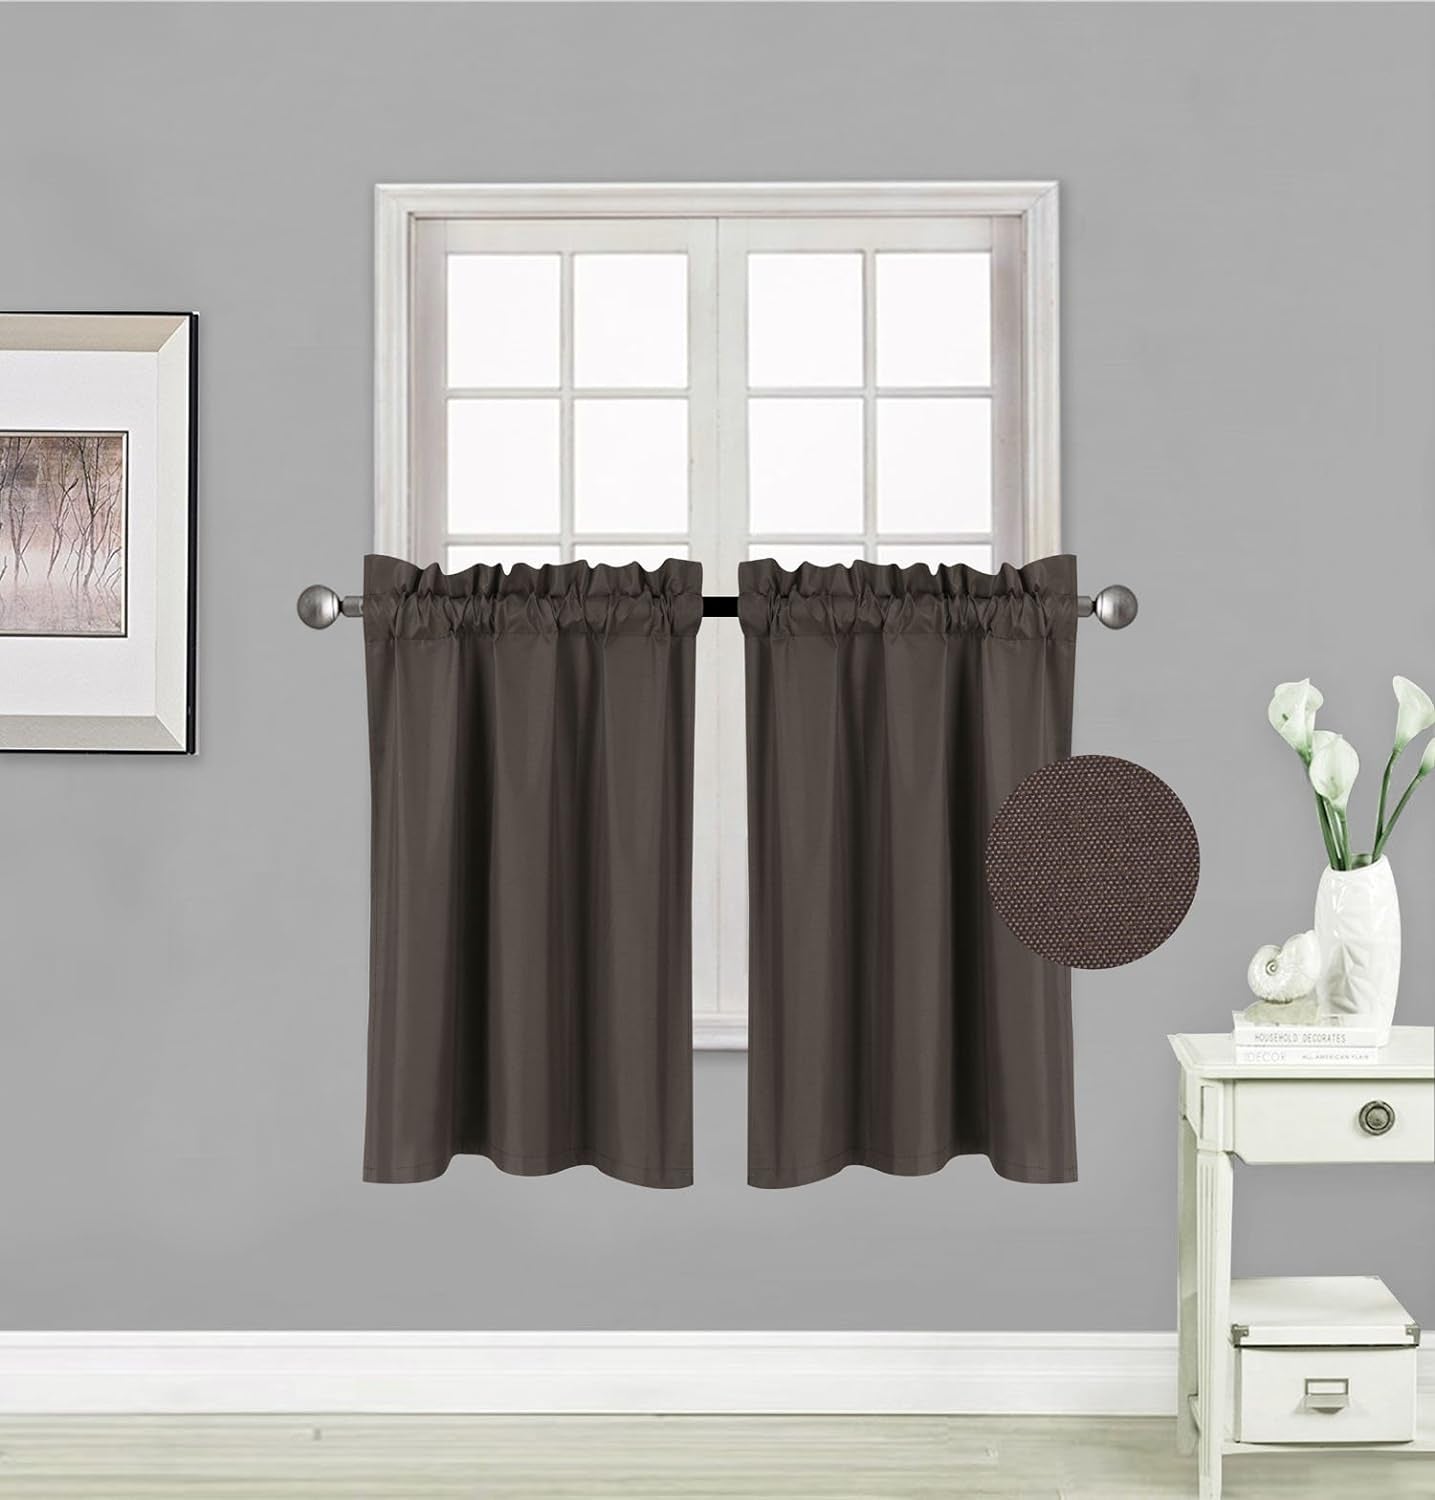 Elegant Home 2 Short Panels Tiers Small Window Treatment Curtain Blackout 28" W X 36" L Each for Kitchen Bathroom # R5  Elegant Home Decor Brown / Coffee  